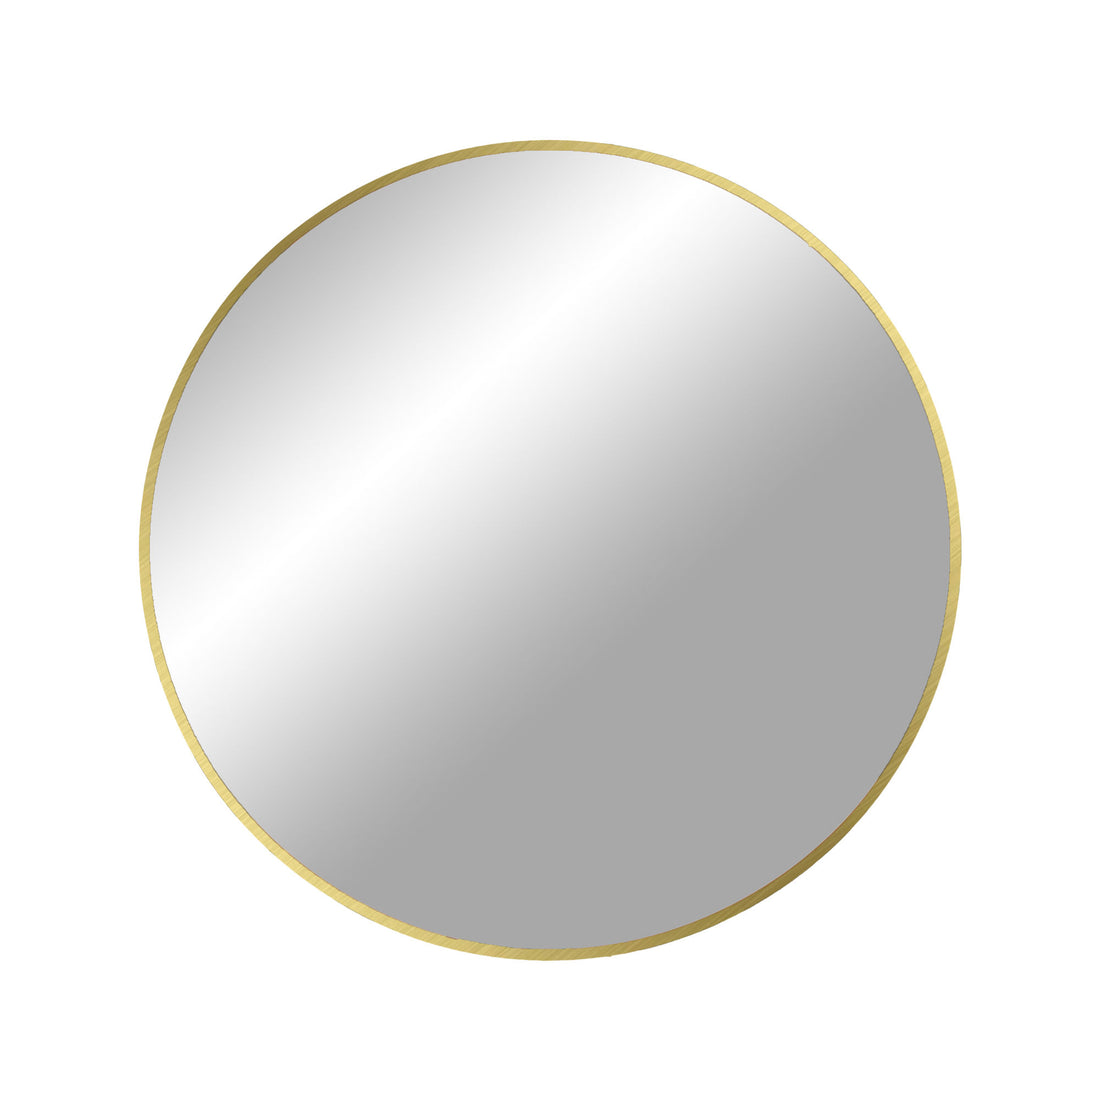 Madrid mirror - mirror in aluminum, brass look, Ø60 cm - 1 - pcs